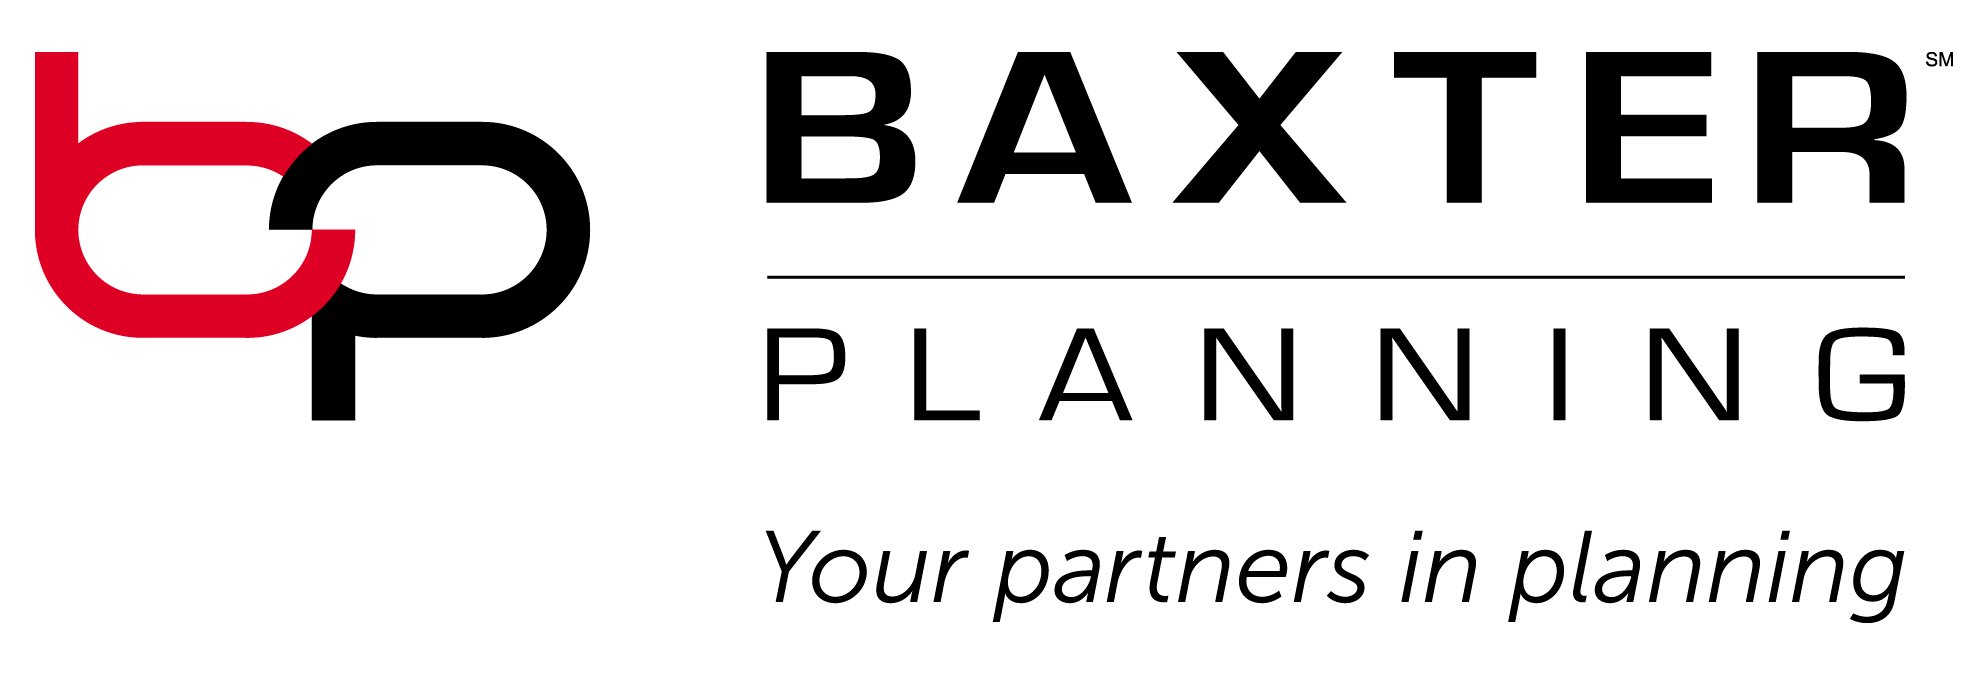 Baxter Planning logo